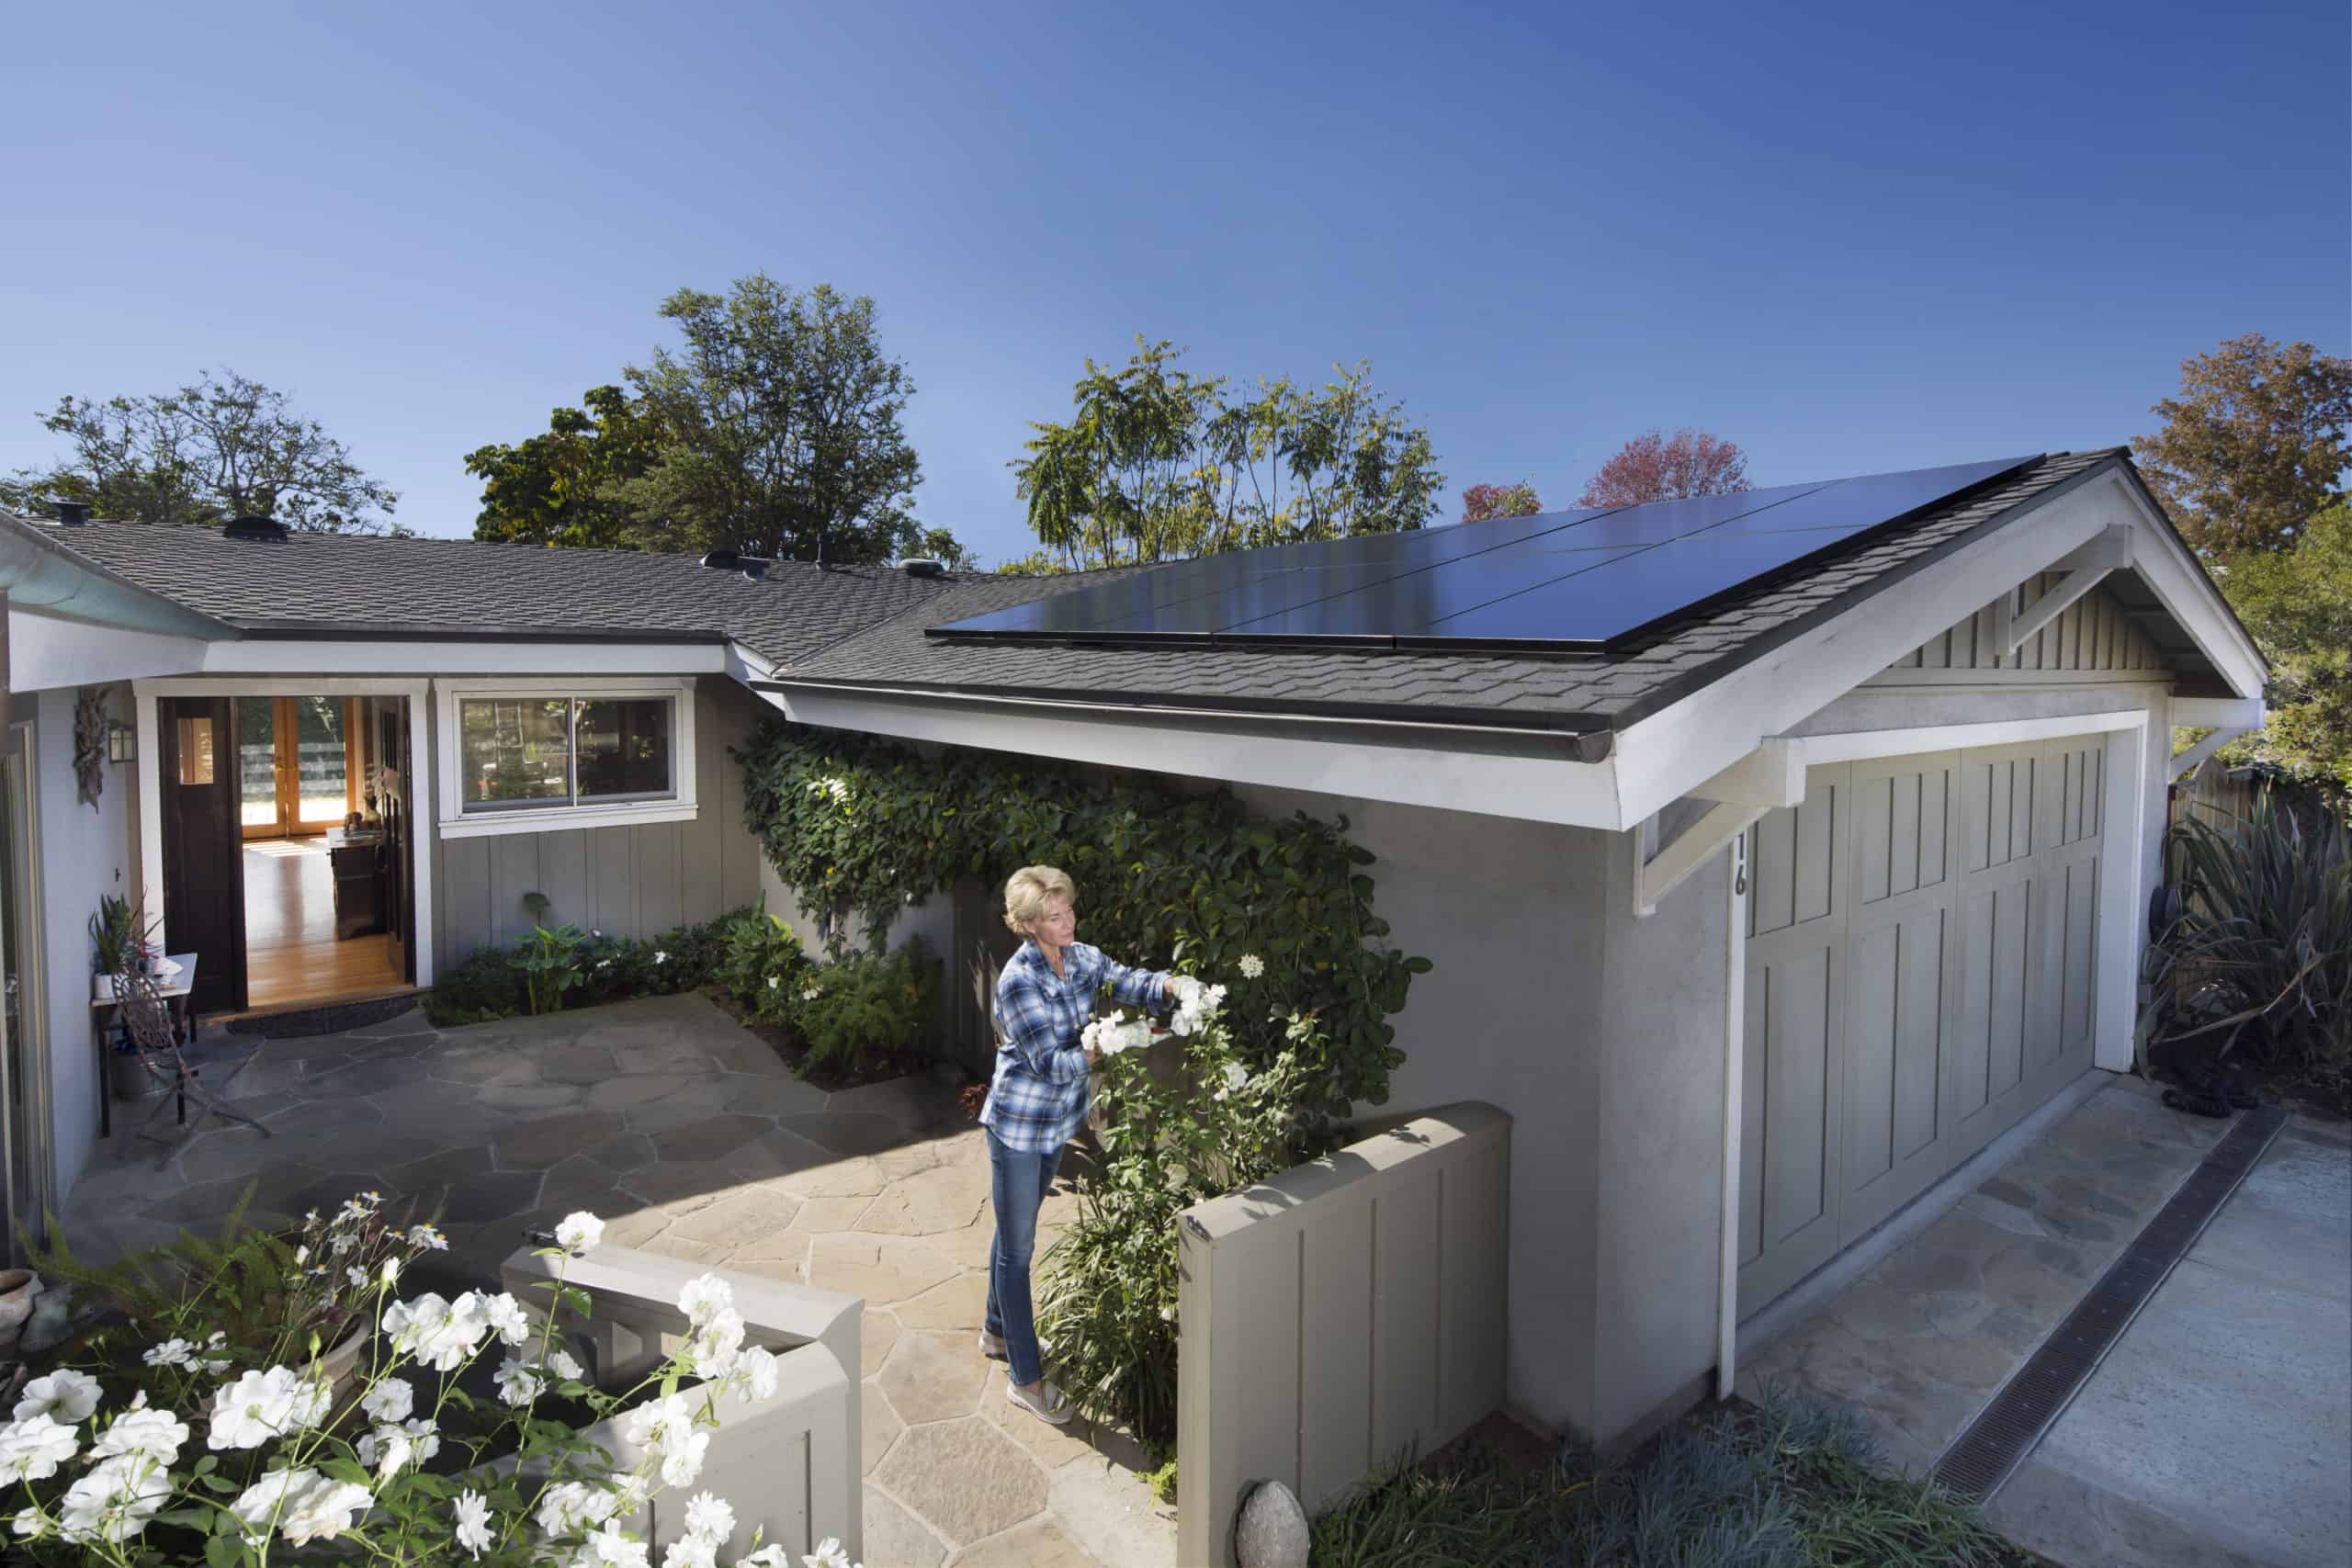 SunPower Home With Solar Panels